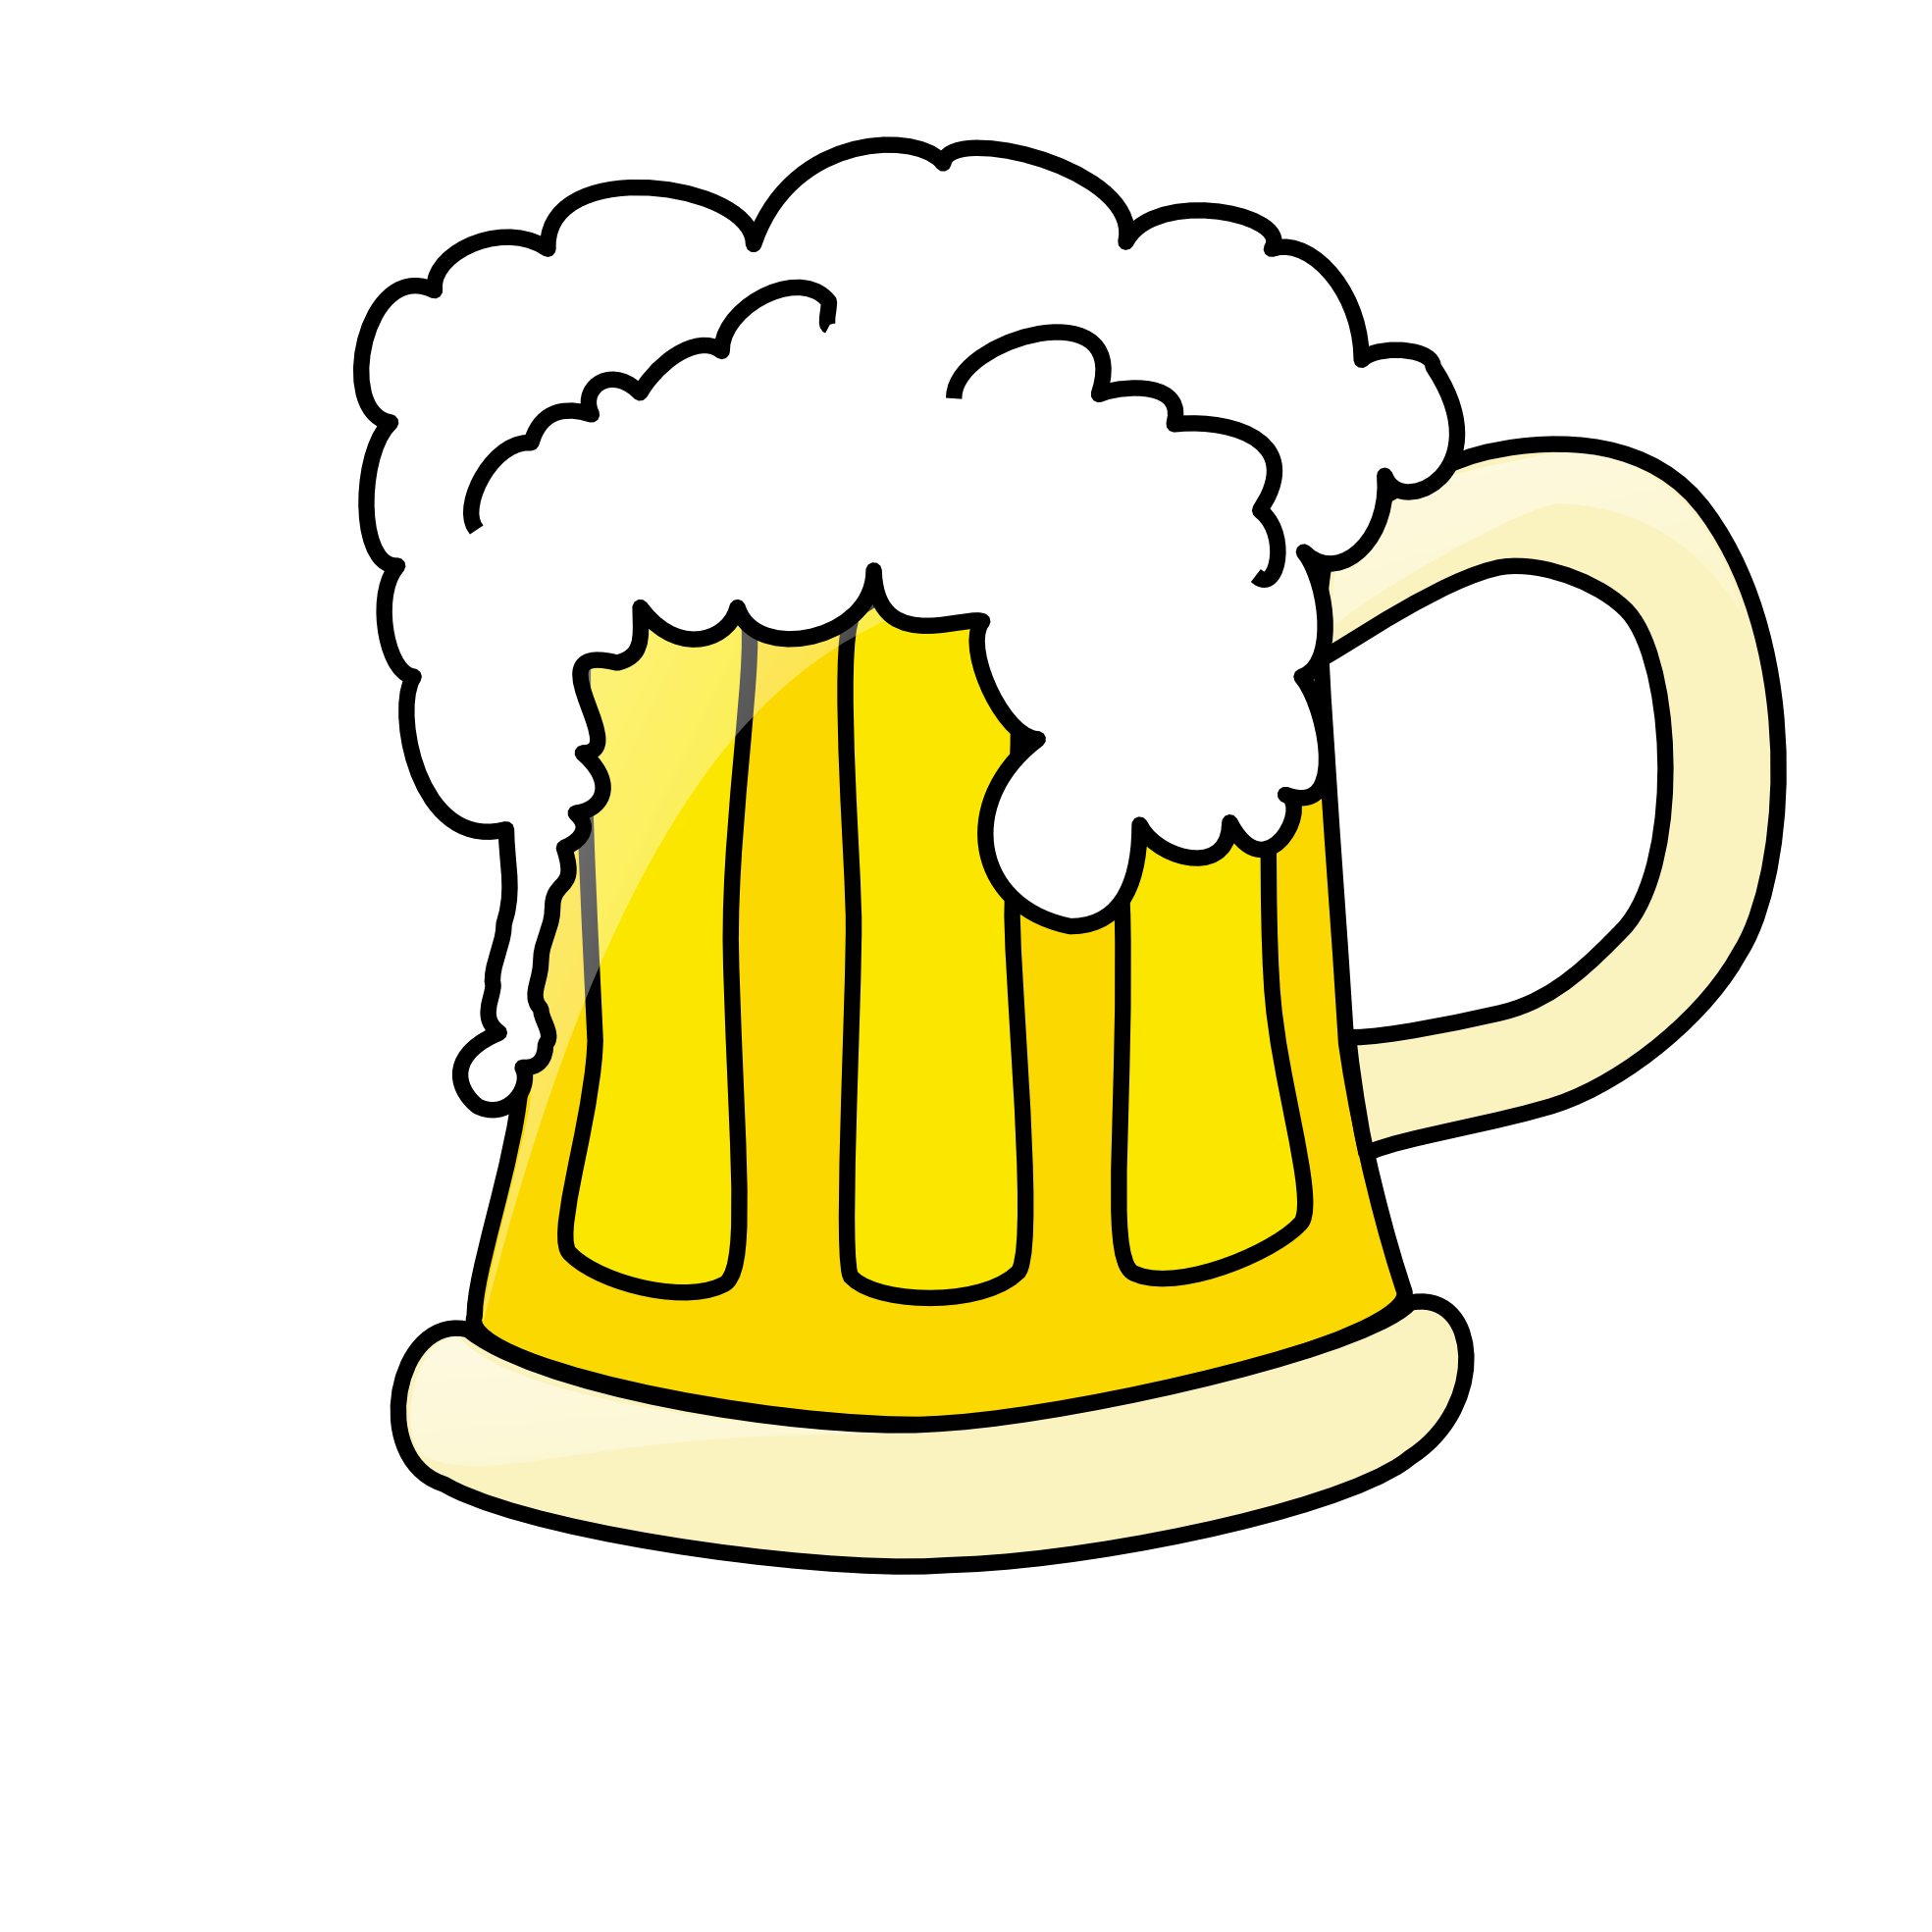 Beer clipart. Clip art free download